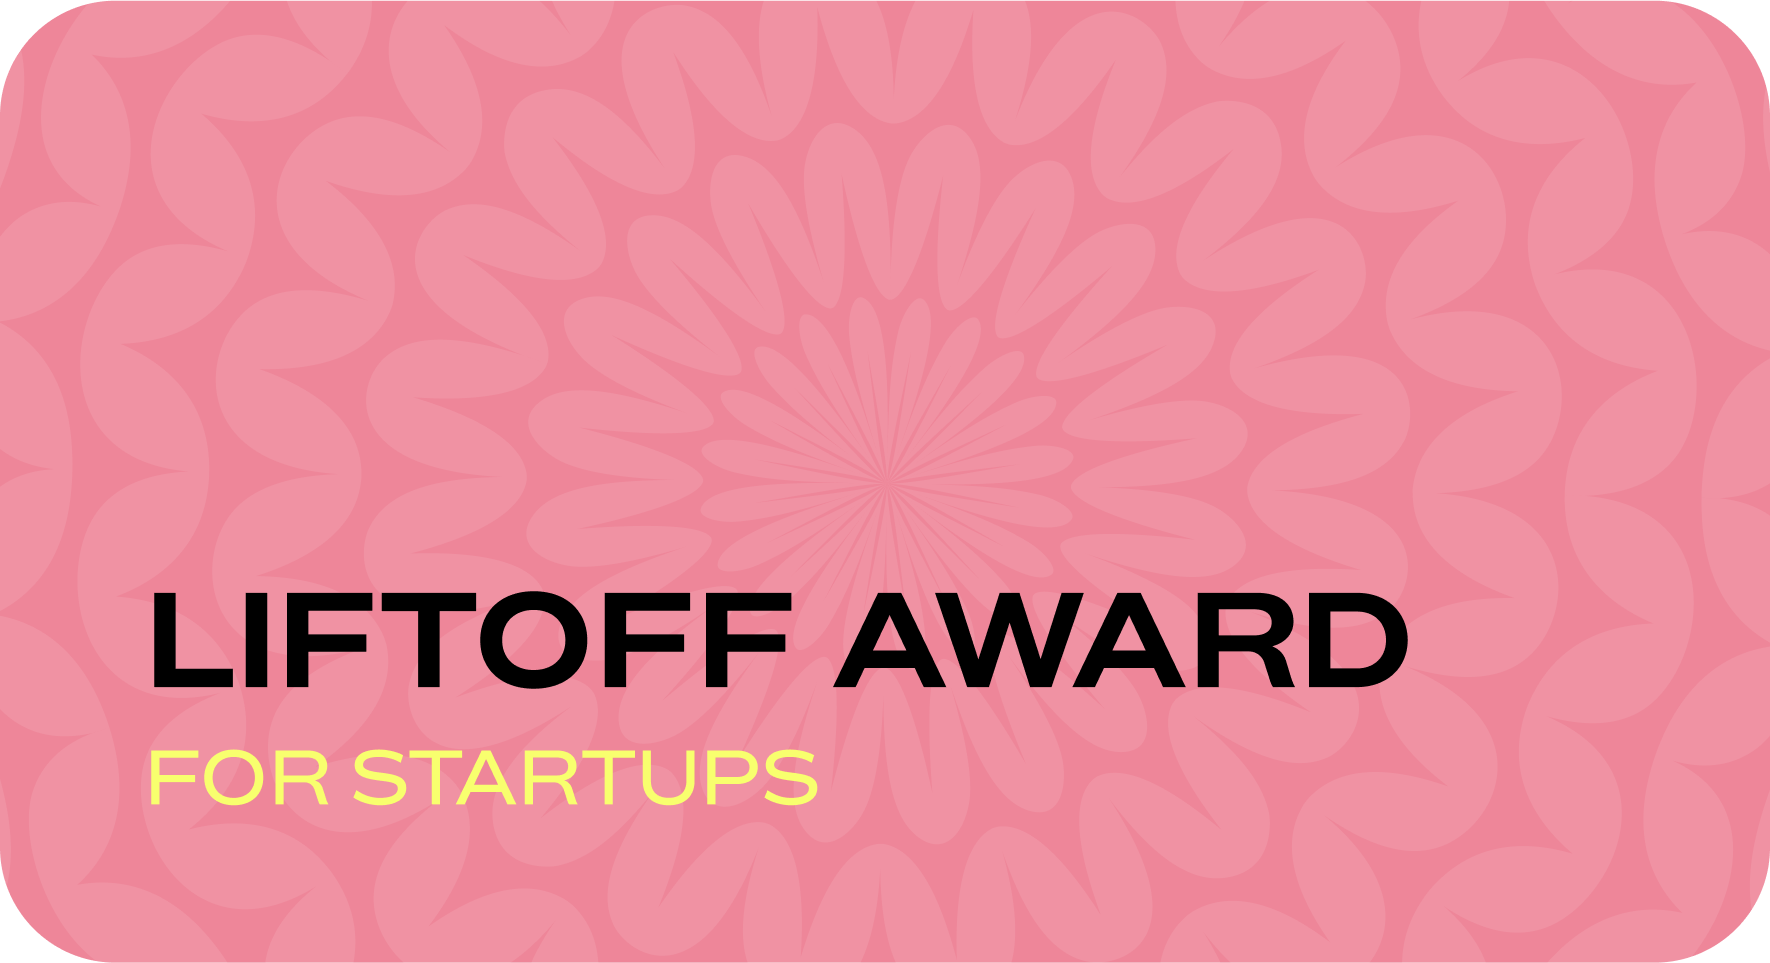 Liftoff award for startups.